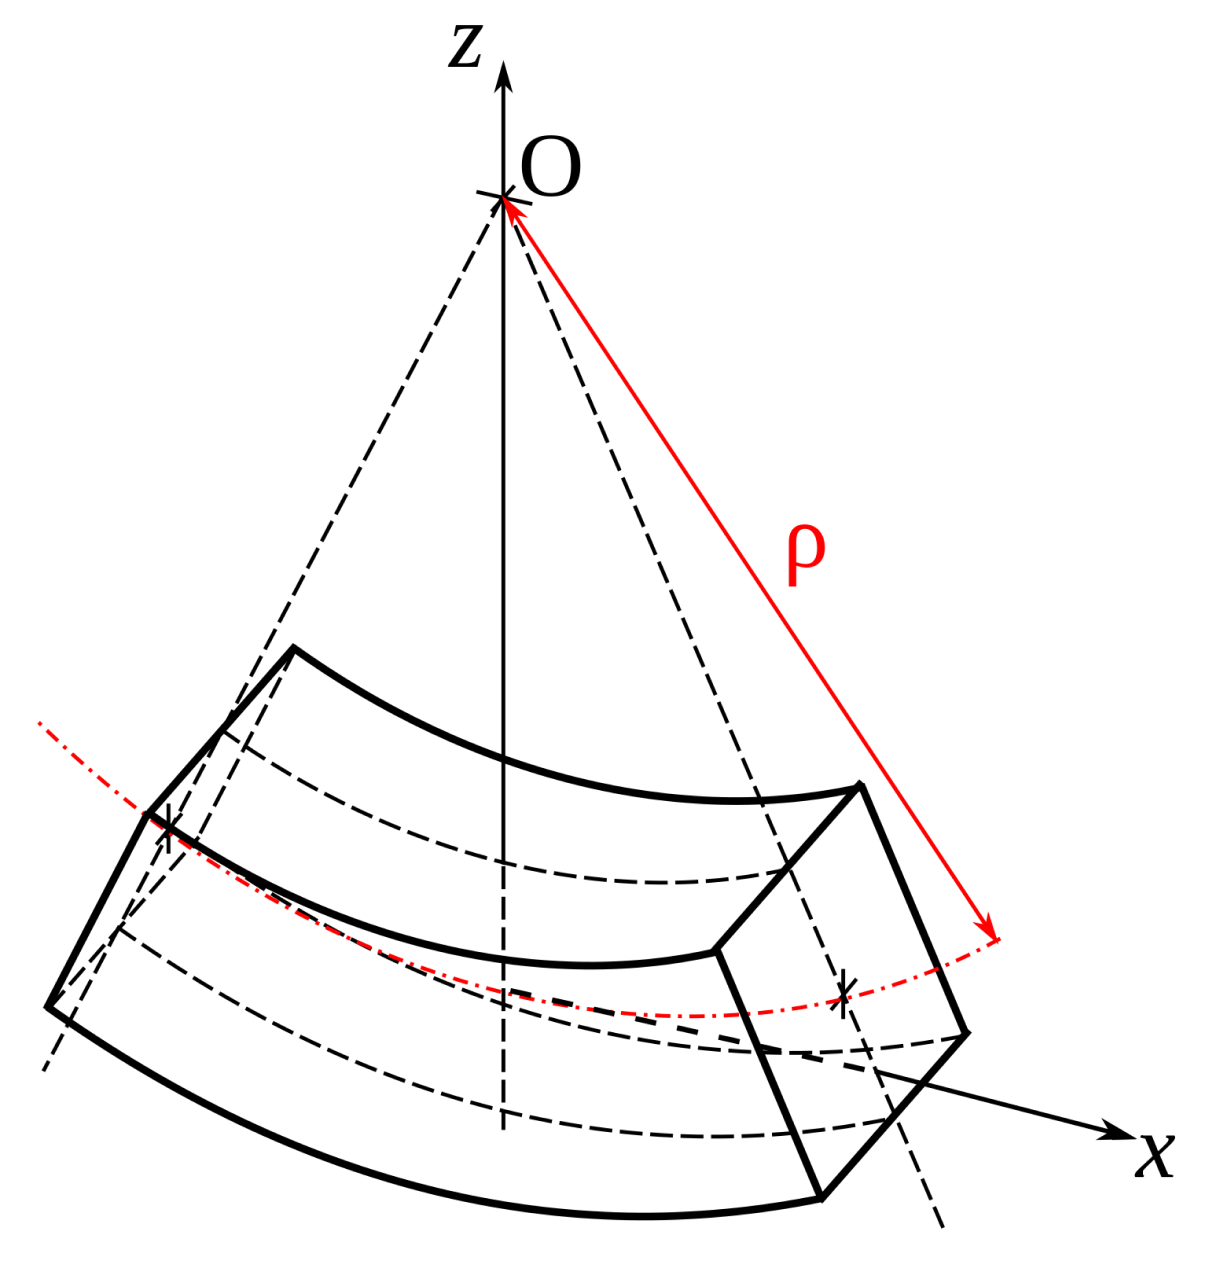 Euler–Bernoulli beam theory